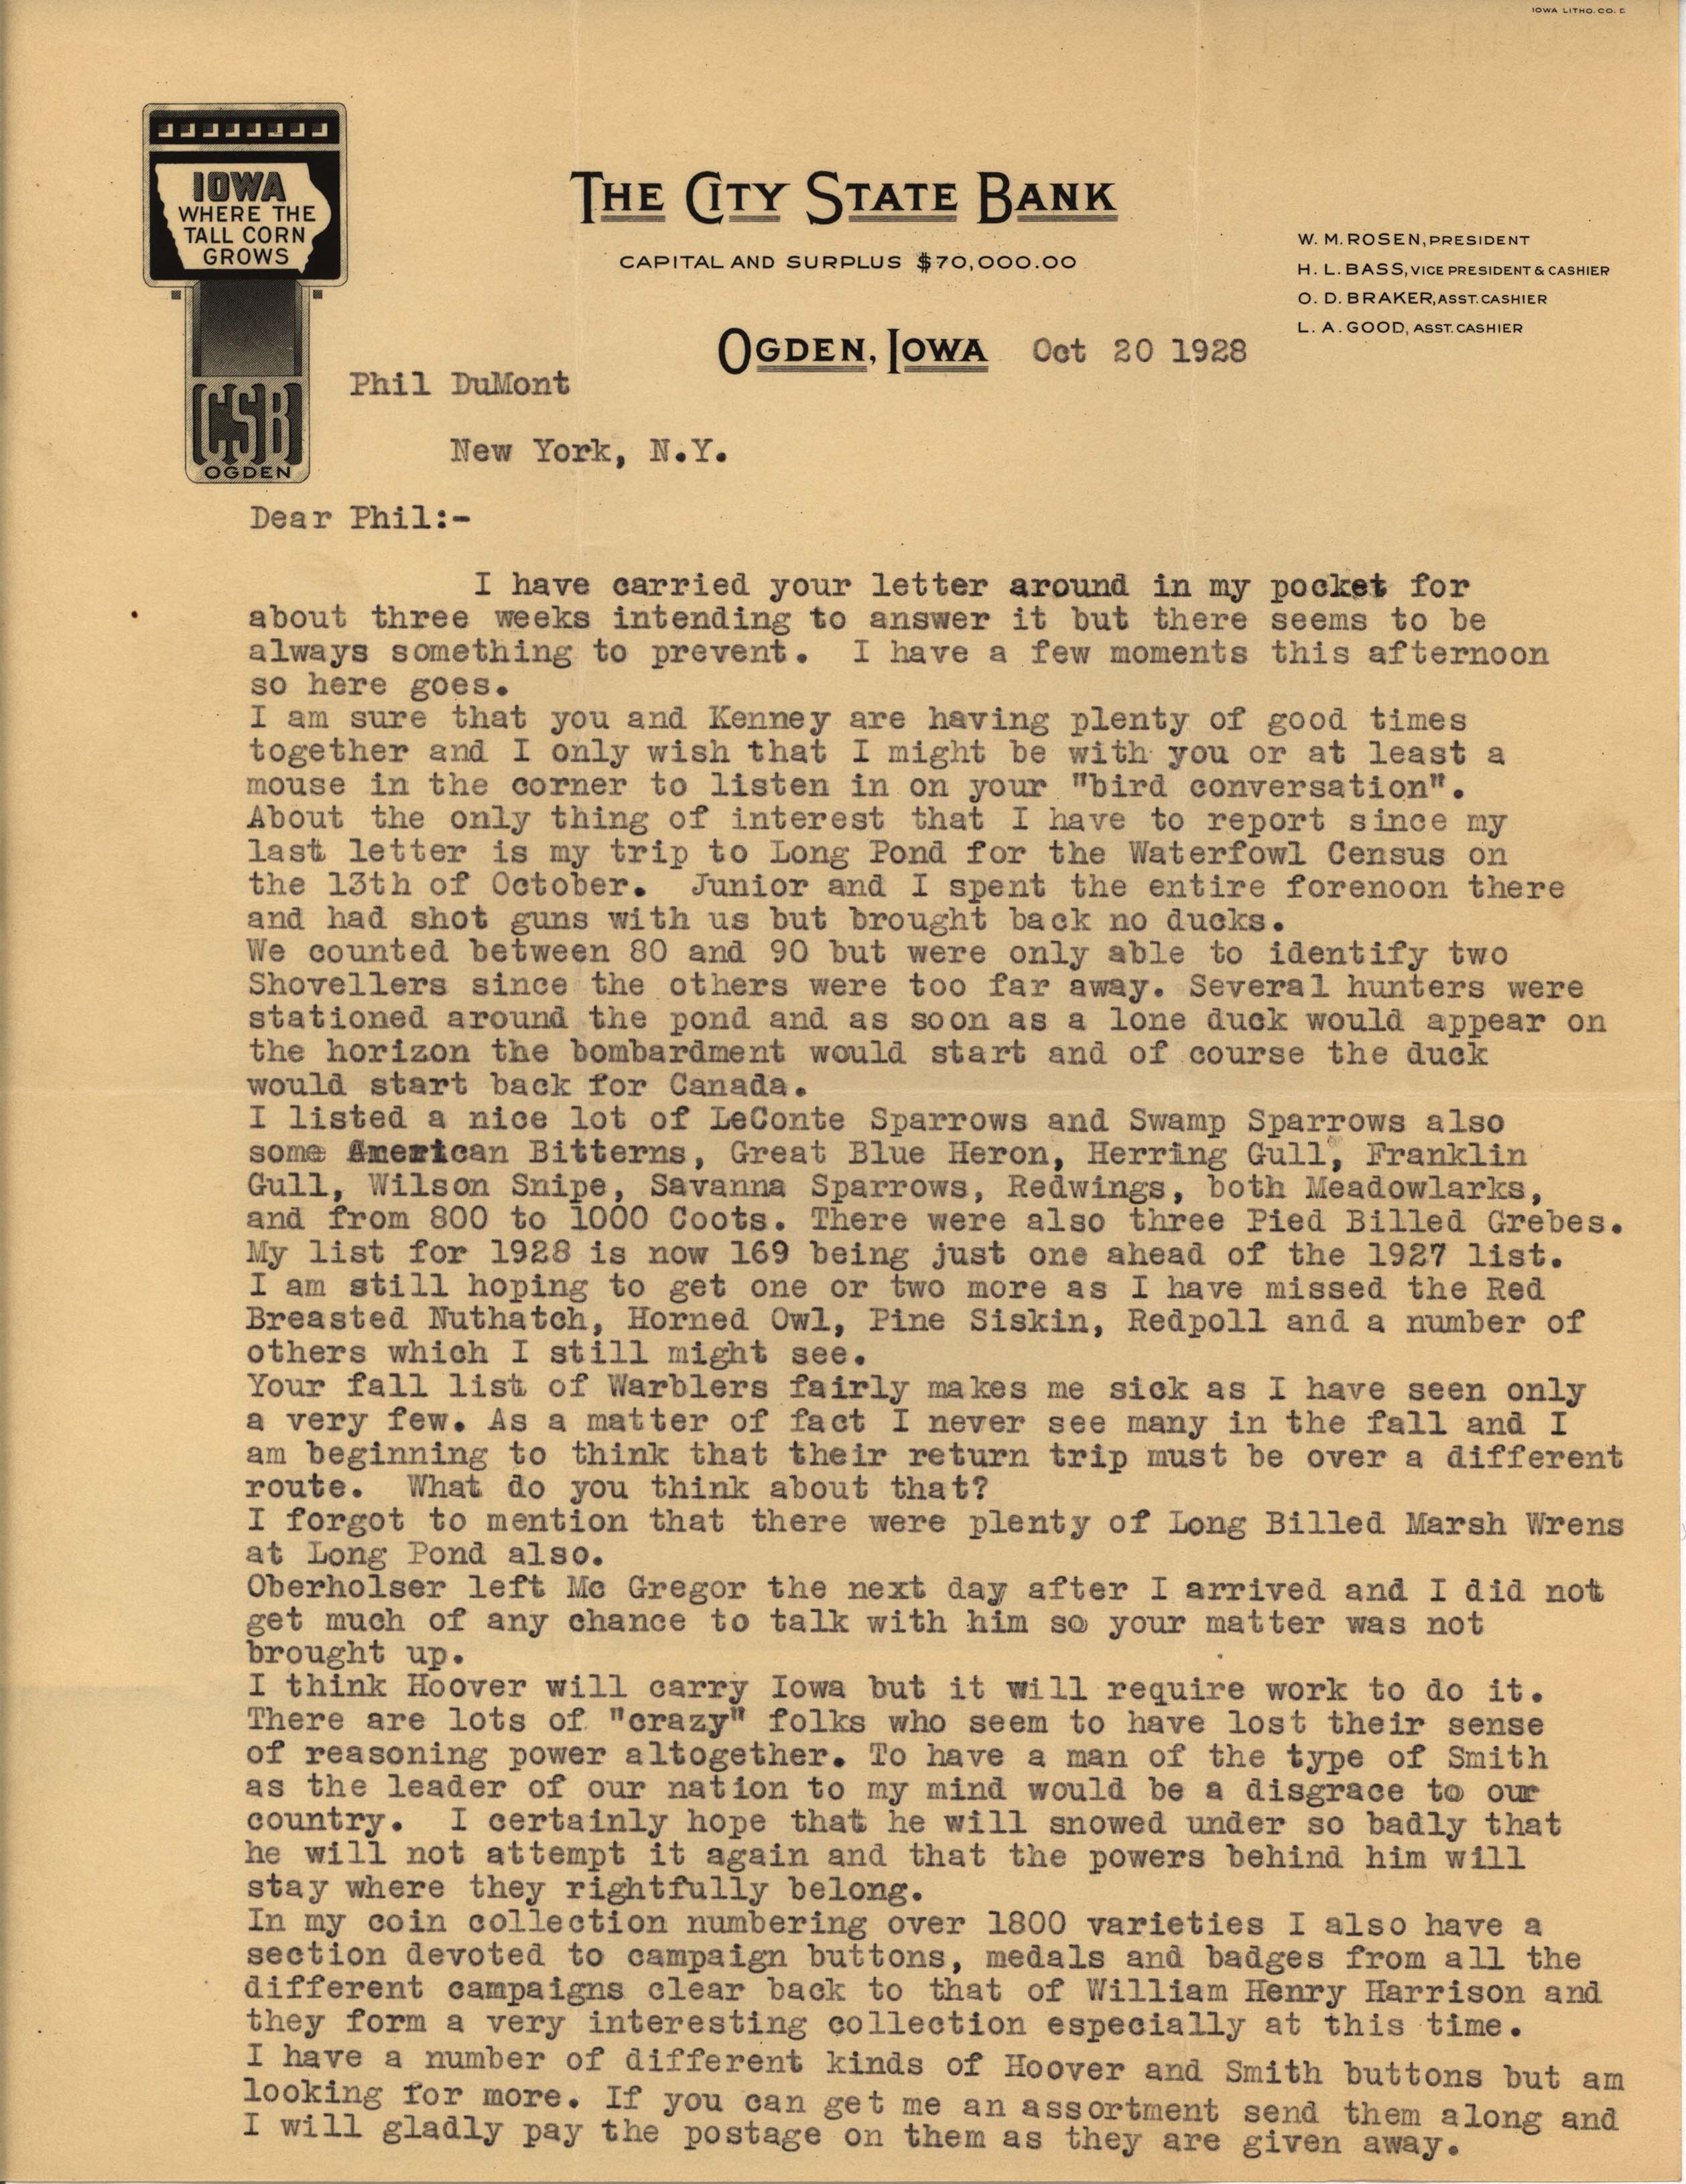 Walter Rosene letter to Philip DuMont regarding Waterfowl Census, October 20, 1928